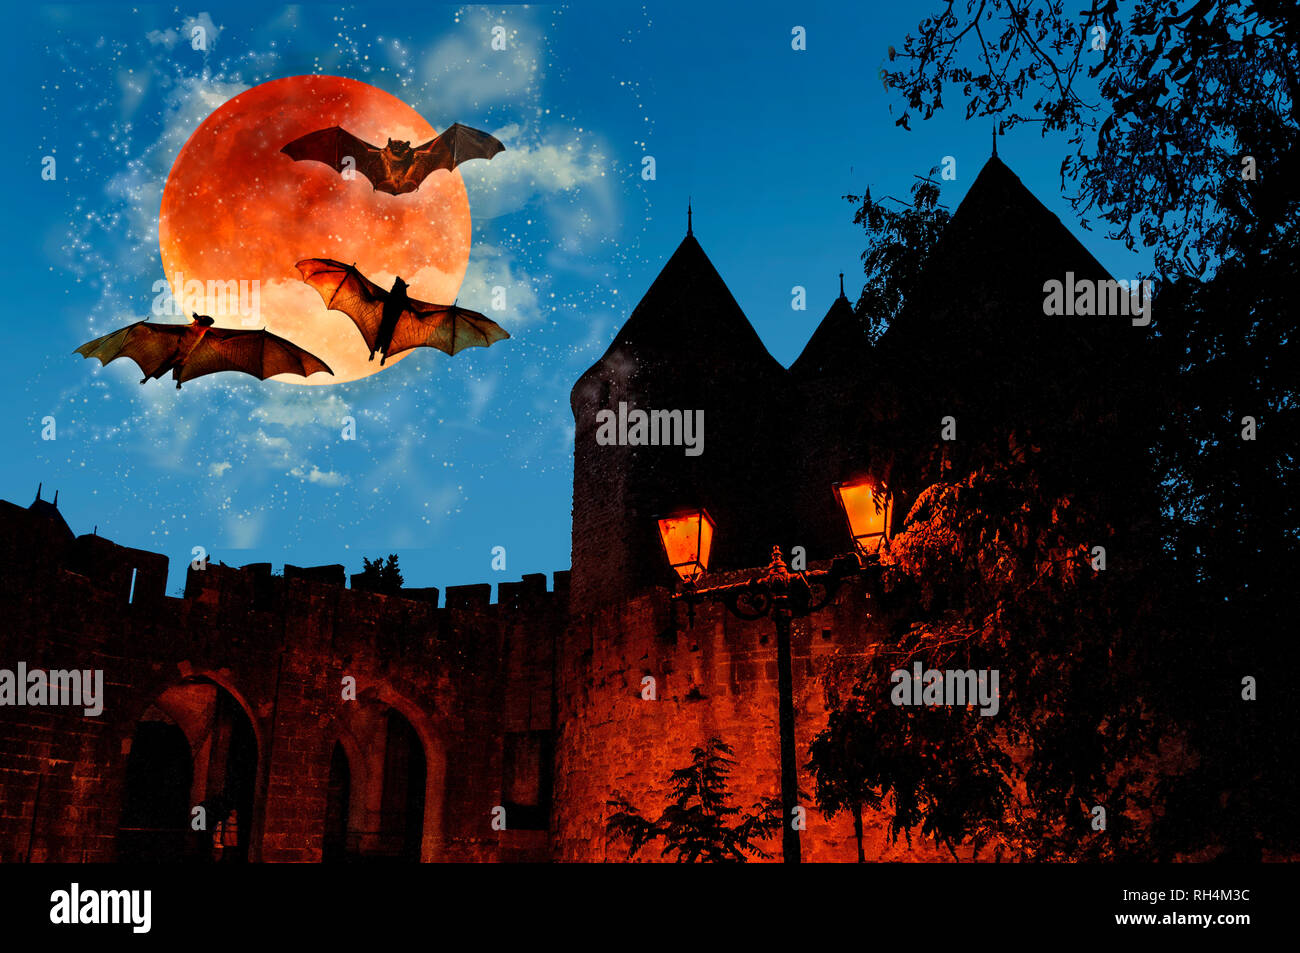 Full moon, bats, old castle at night Stock Photo